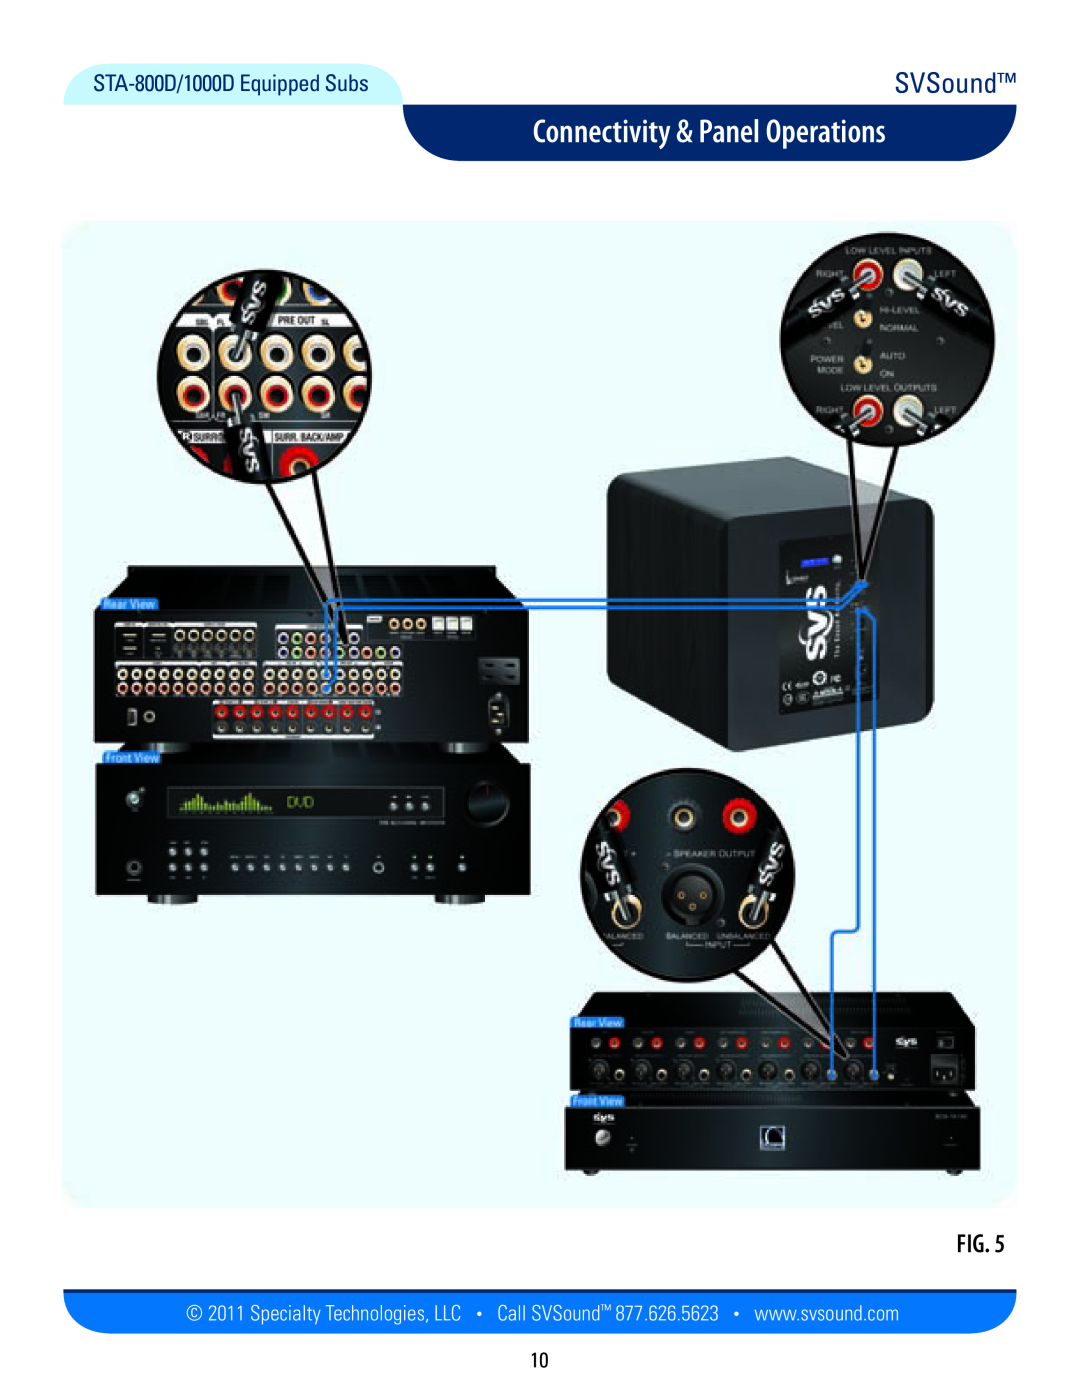 SV Sound PB13-Ultra, PB12-Plus, PC12-Plus, SB13-Plus Connectivity & Panel Operations, SVSound, STA-800D/1000DEquipped Subs 